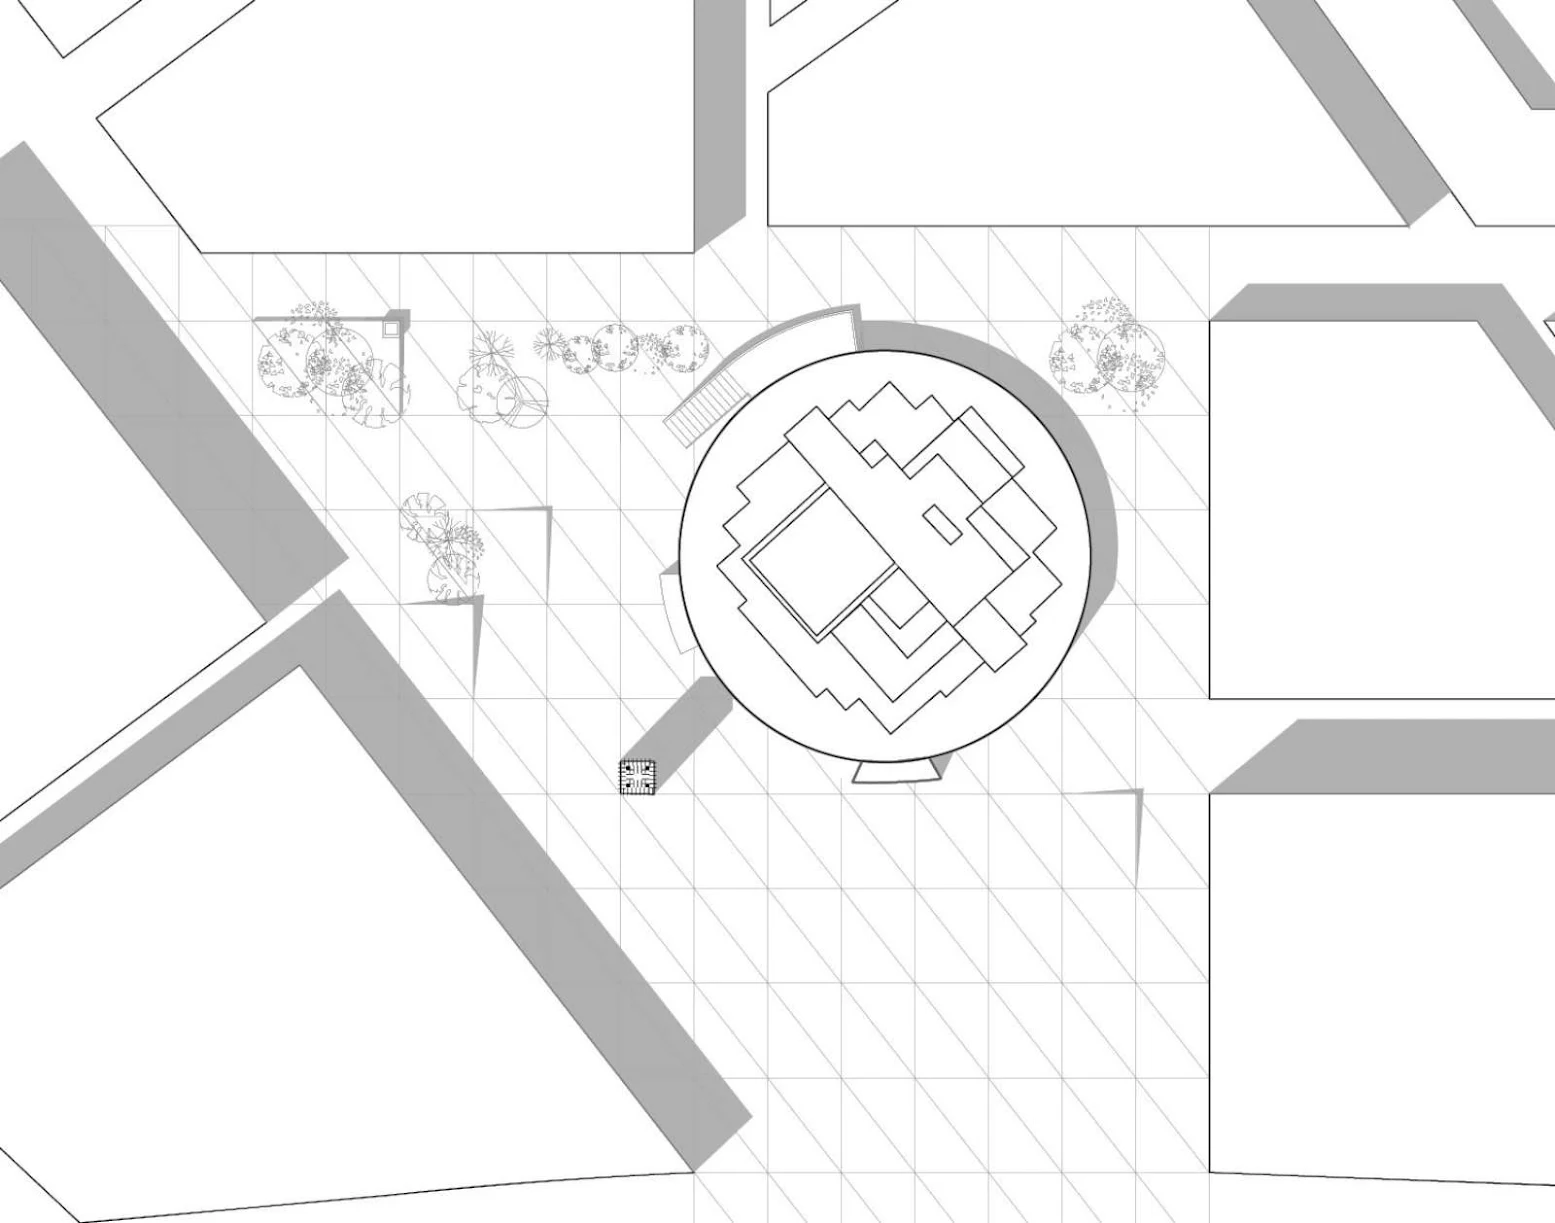 Henning Larsen Architects wins Kiruna City Hall competition